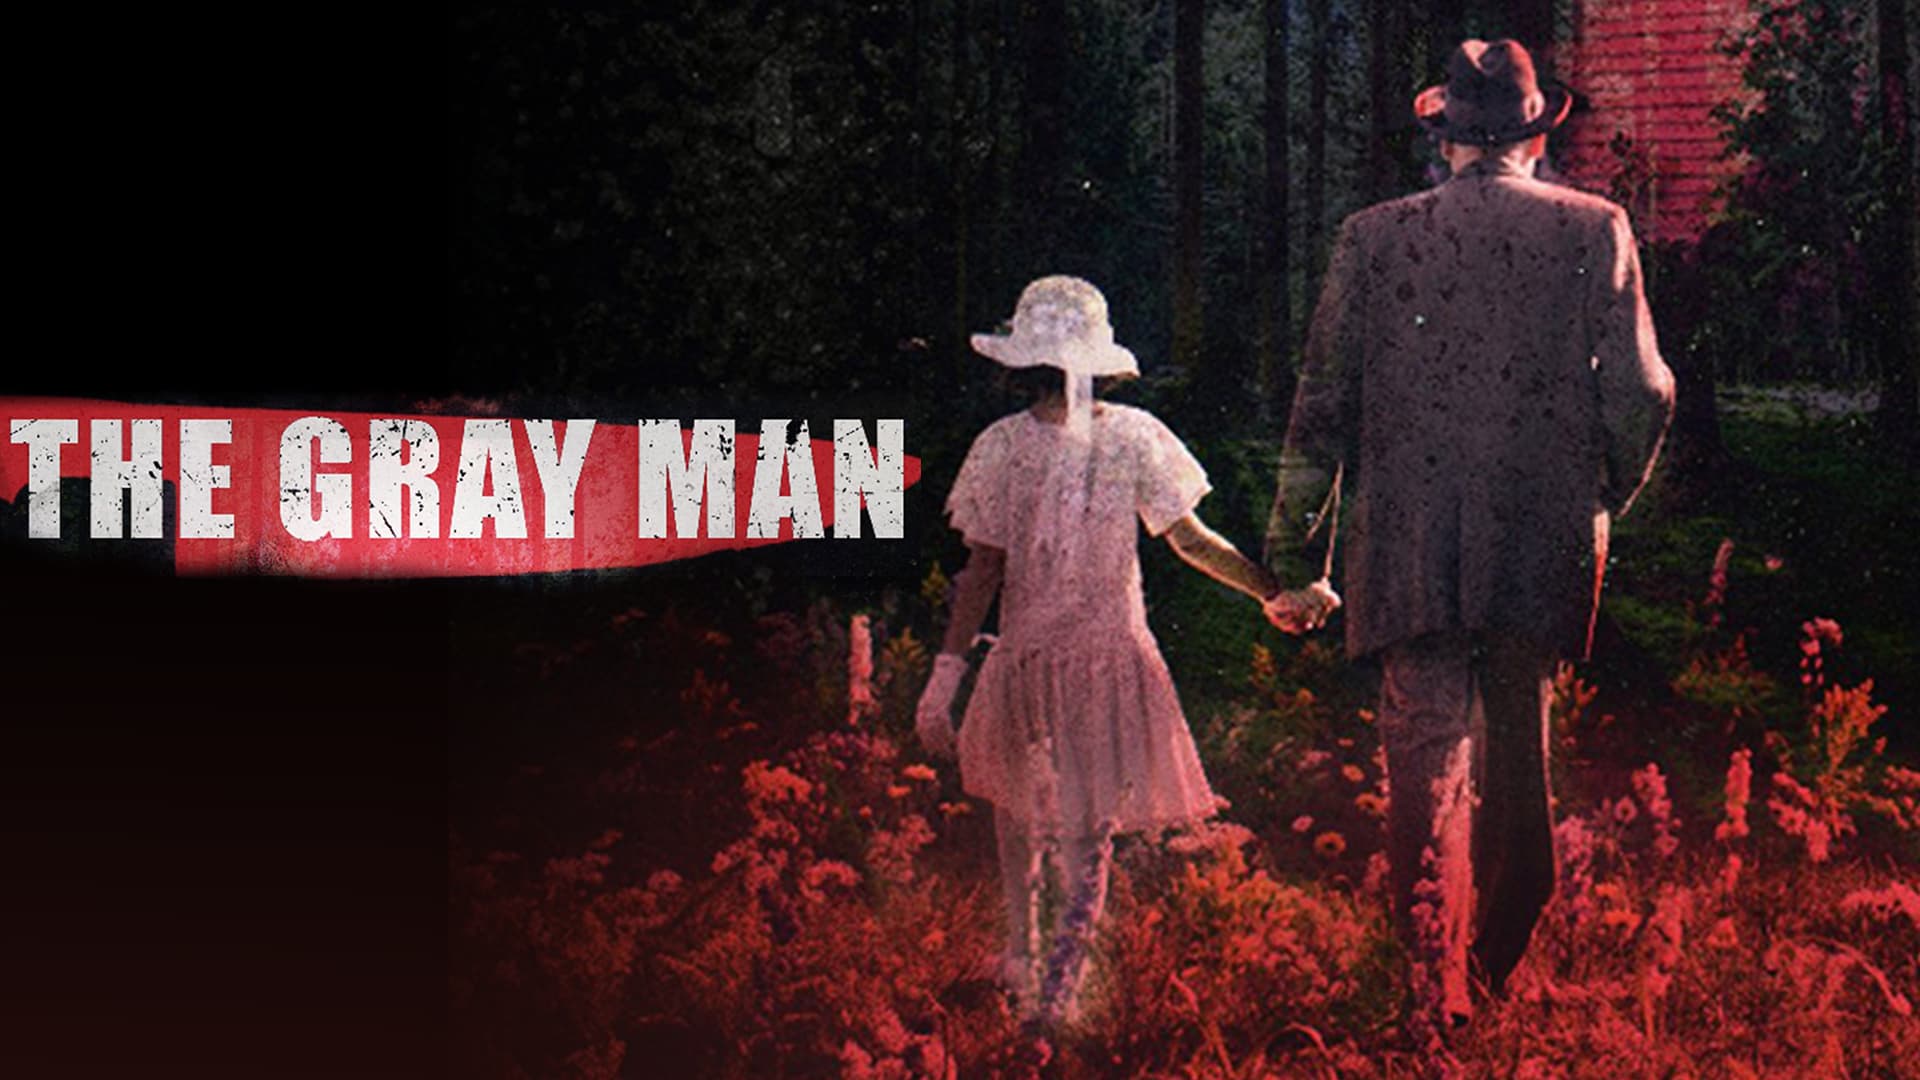 Watch The Gray Man (2007) - Free Movies